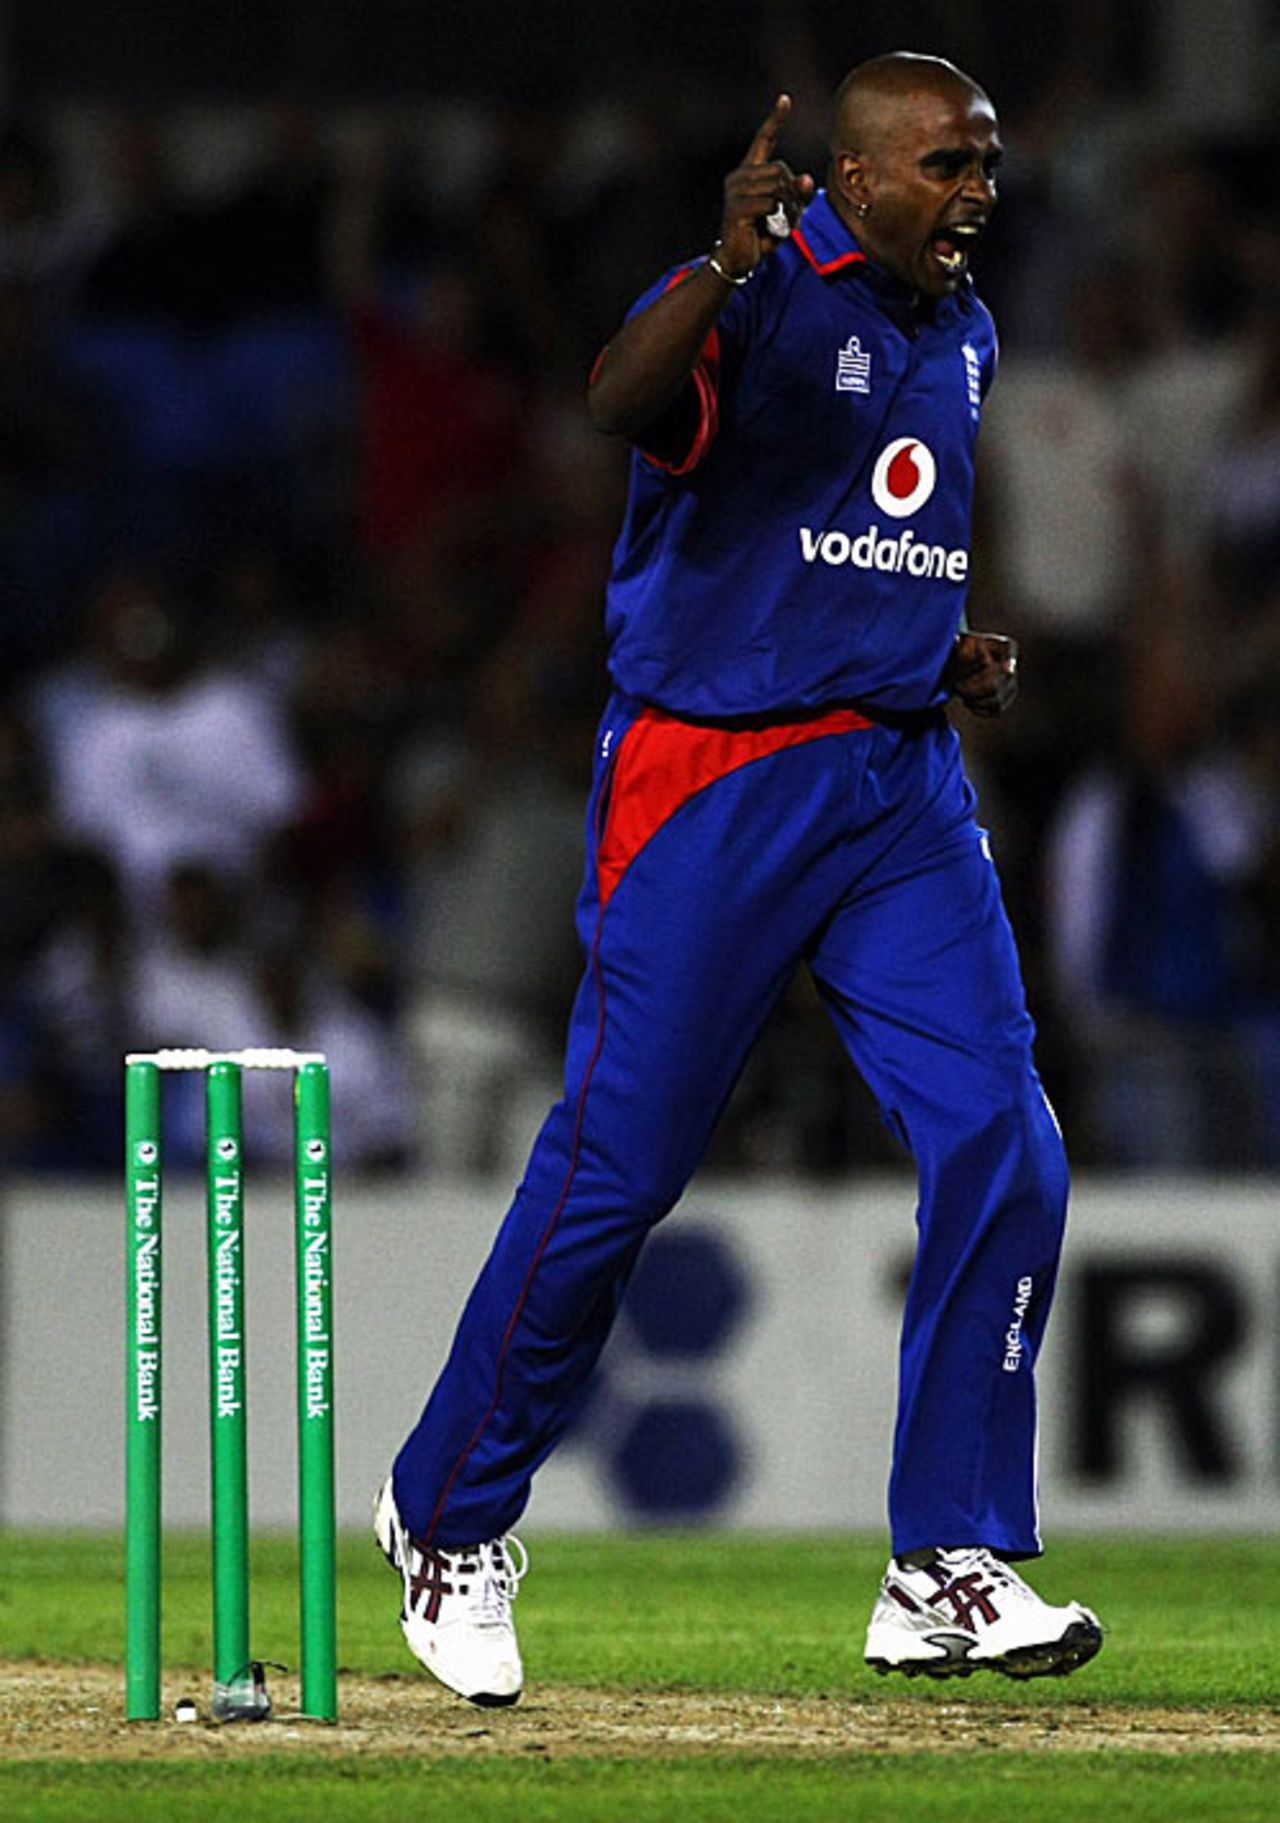 Dimitri Mascarenhas celebrates one of his two wickets, New Zealand v England, 1st Twenty20, Auckland, February 5, 2008